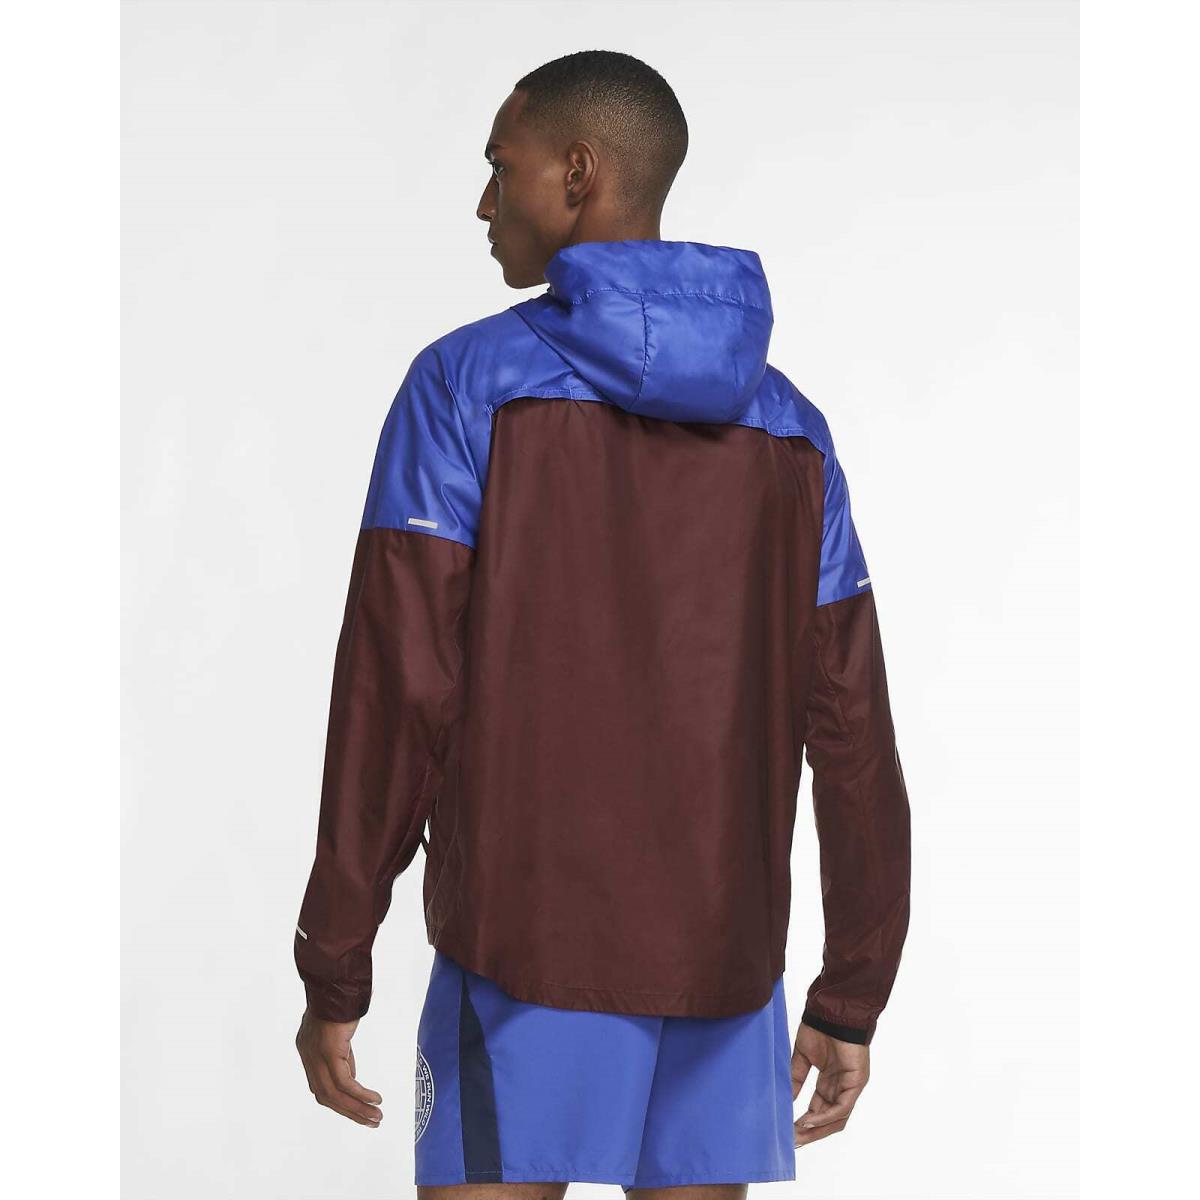 Nike clothing Shieldrunner Jacket - Astronomy Blue & Mystic Dates 0